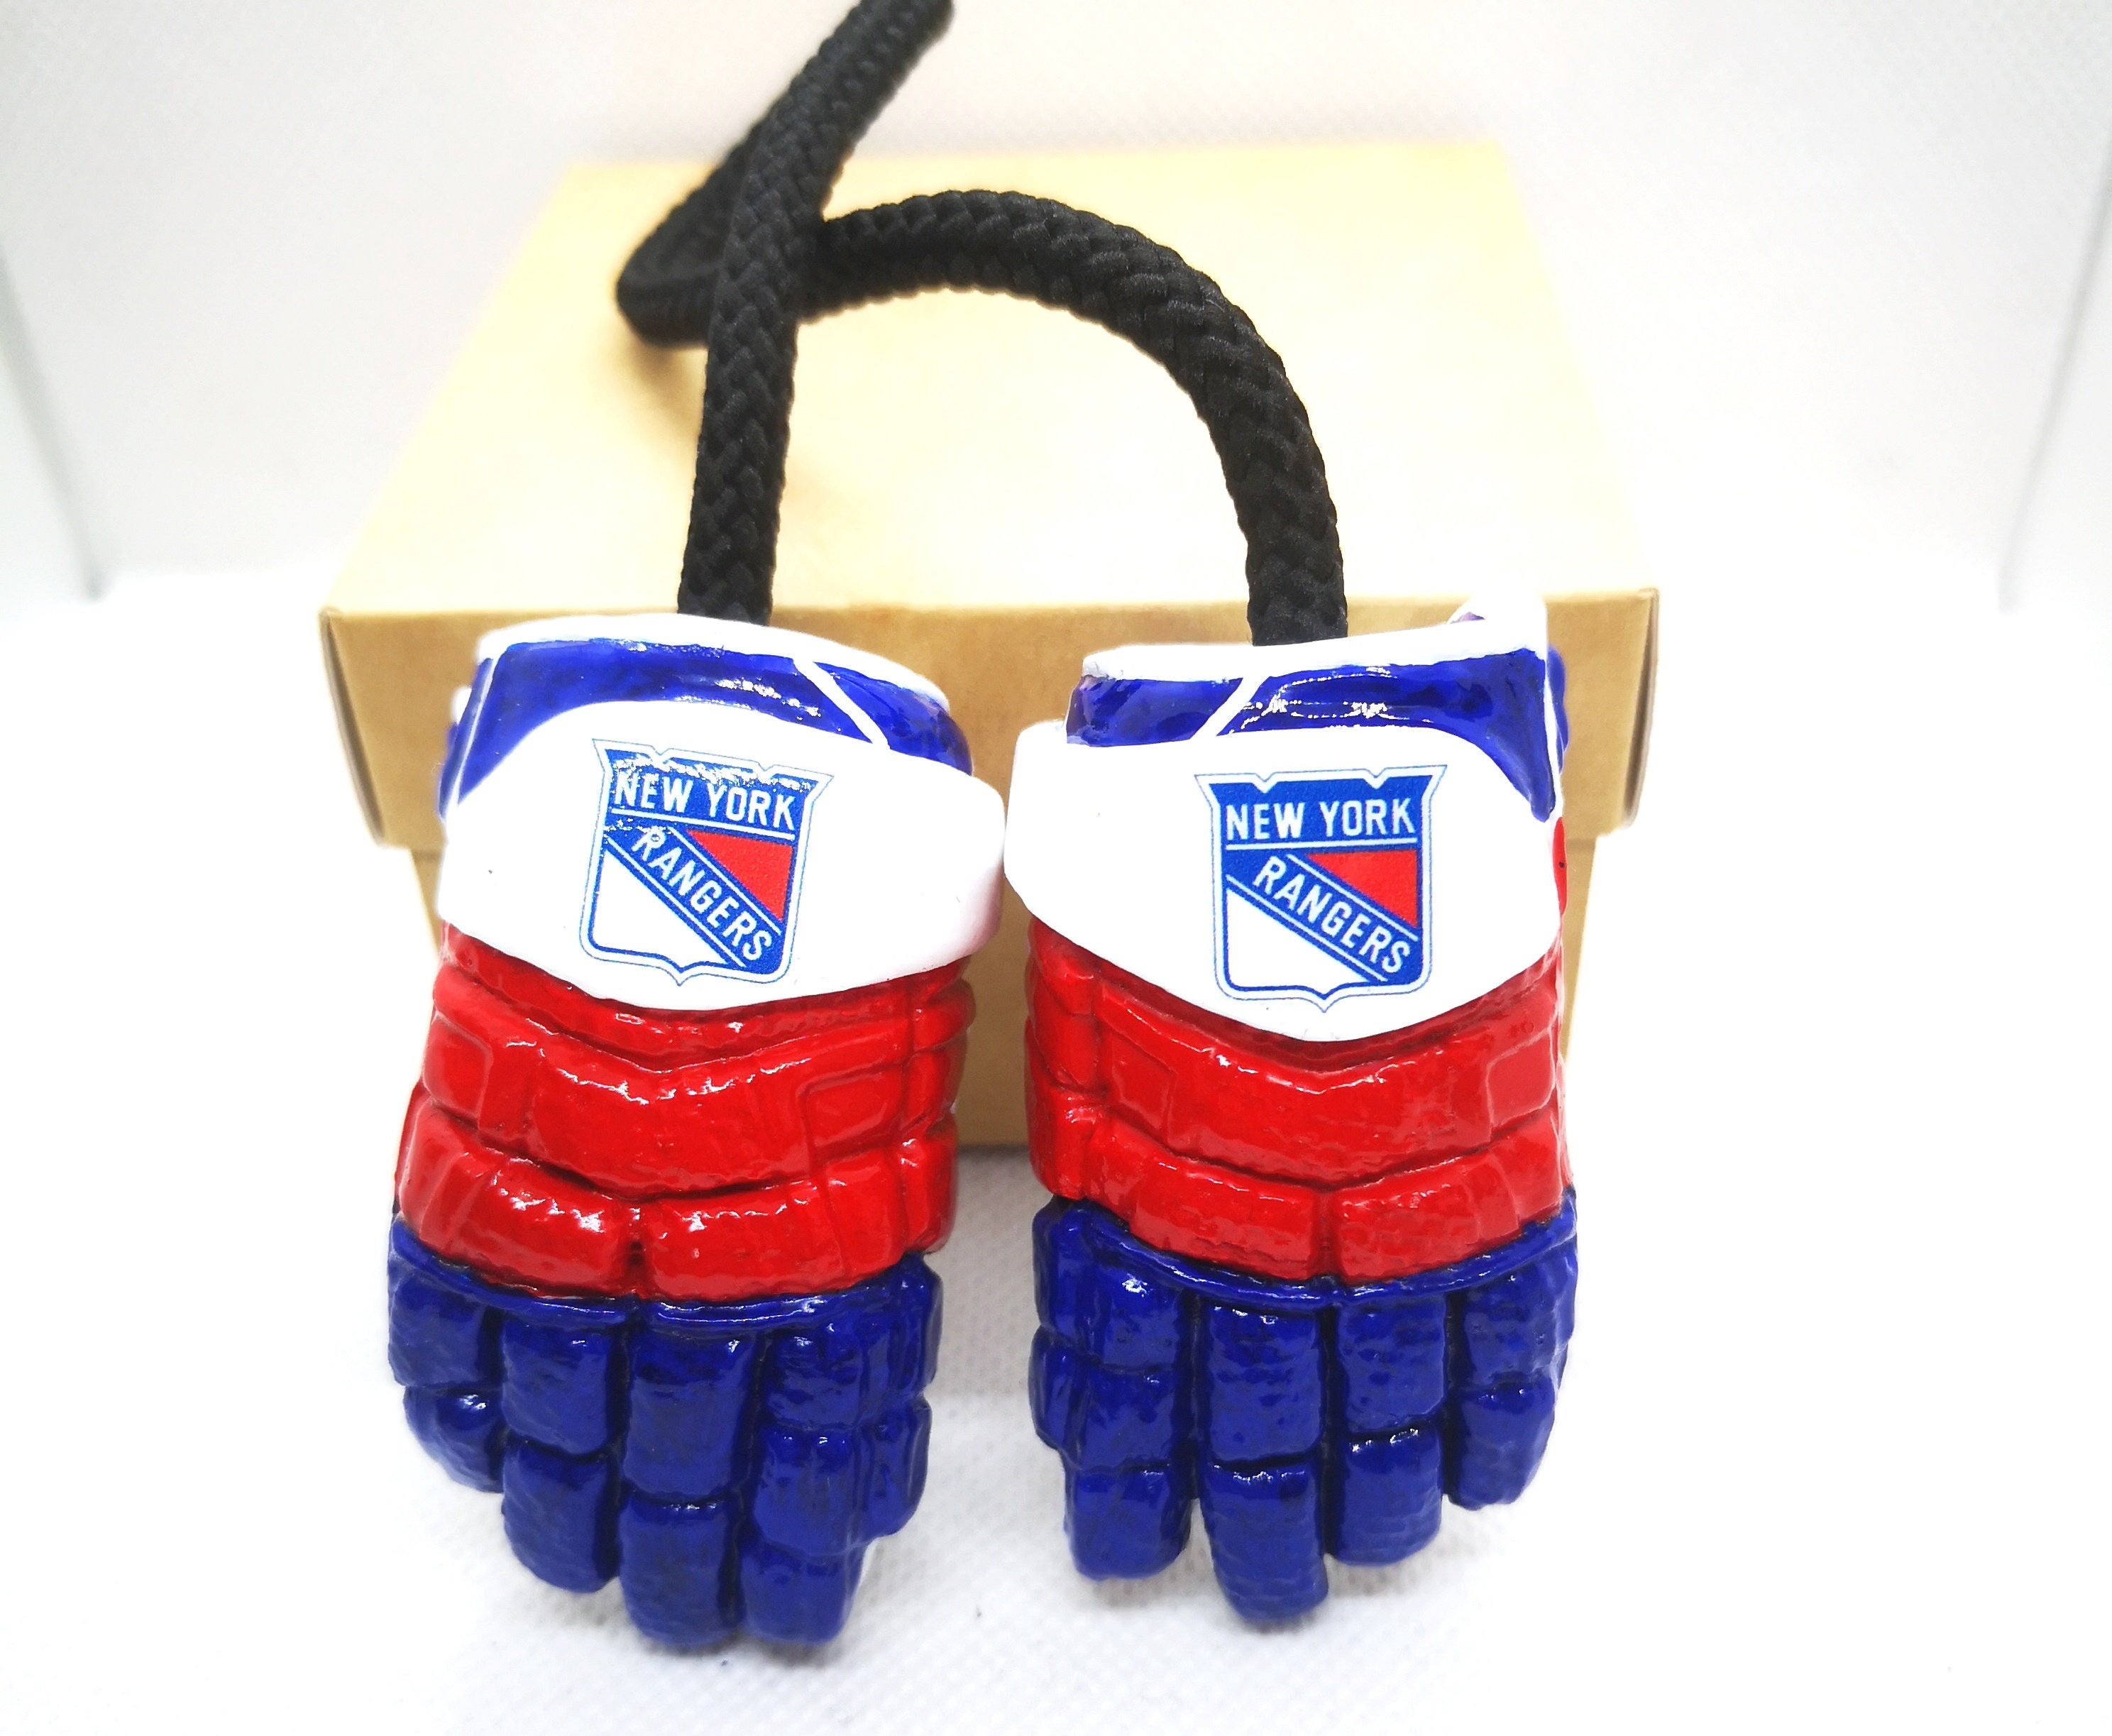 Anybody ever order any gear from hockey Rangers shop? : r/rangers